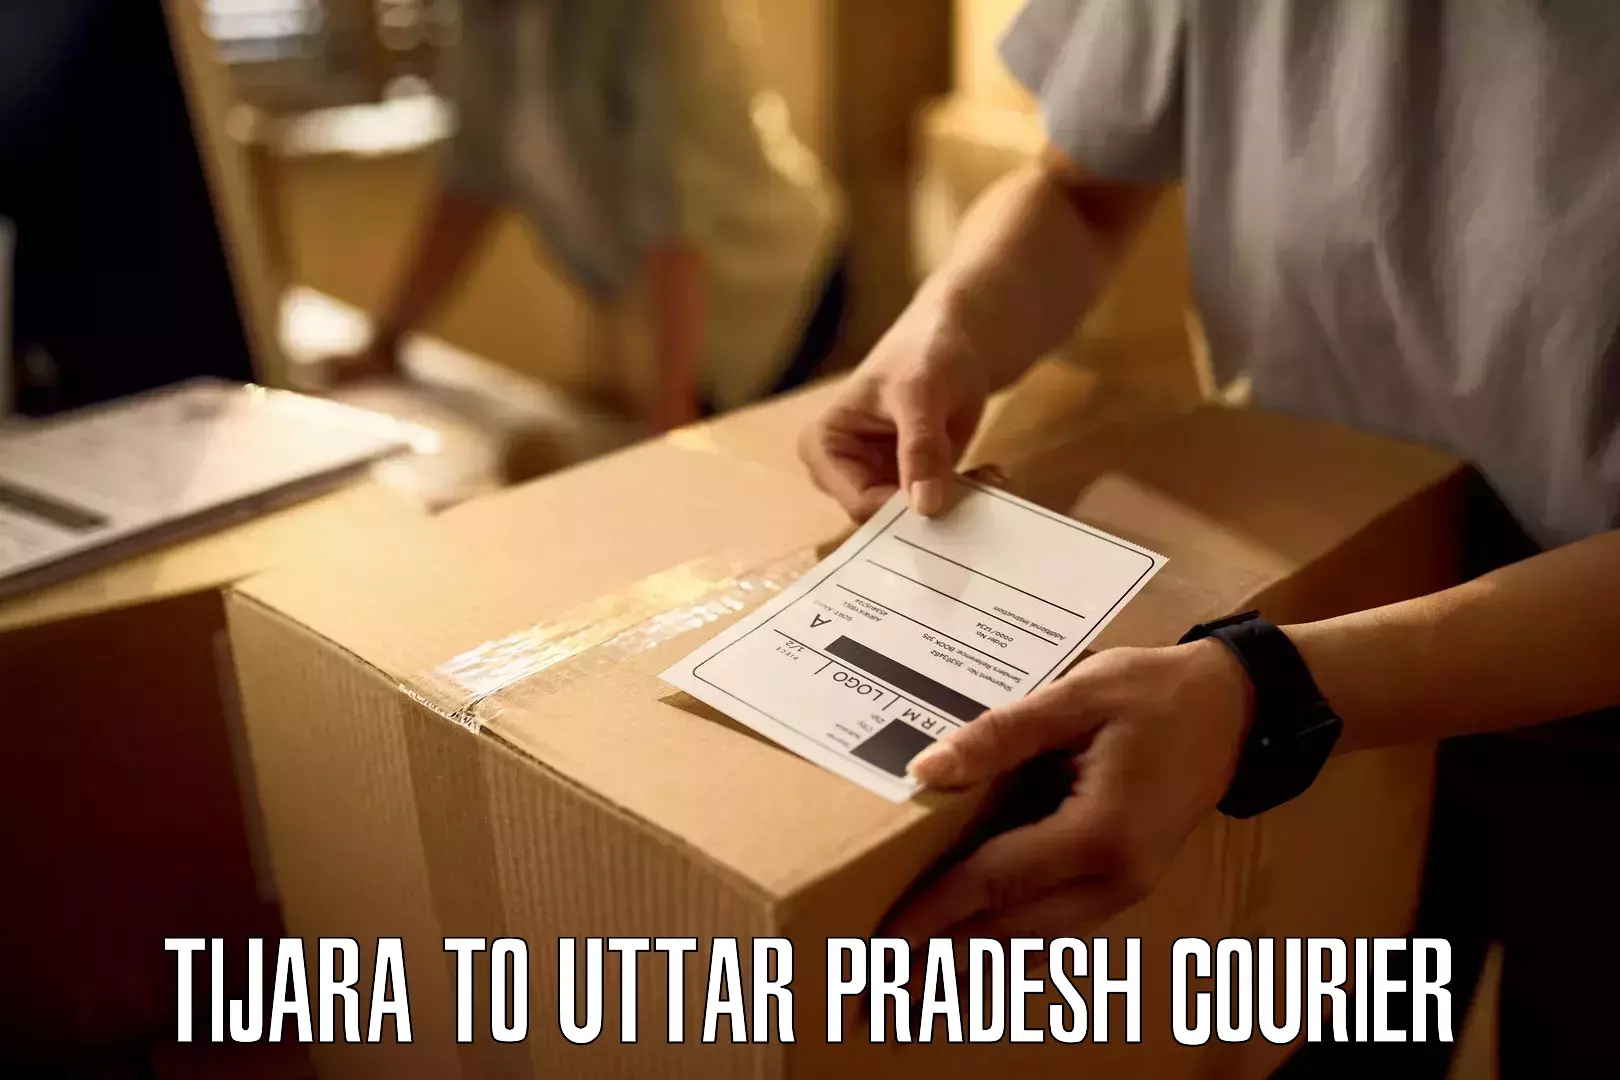 Local delivery service Tijara to Uttar Pradesh